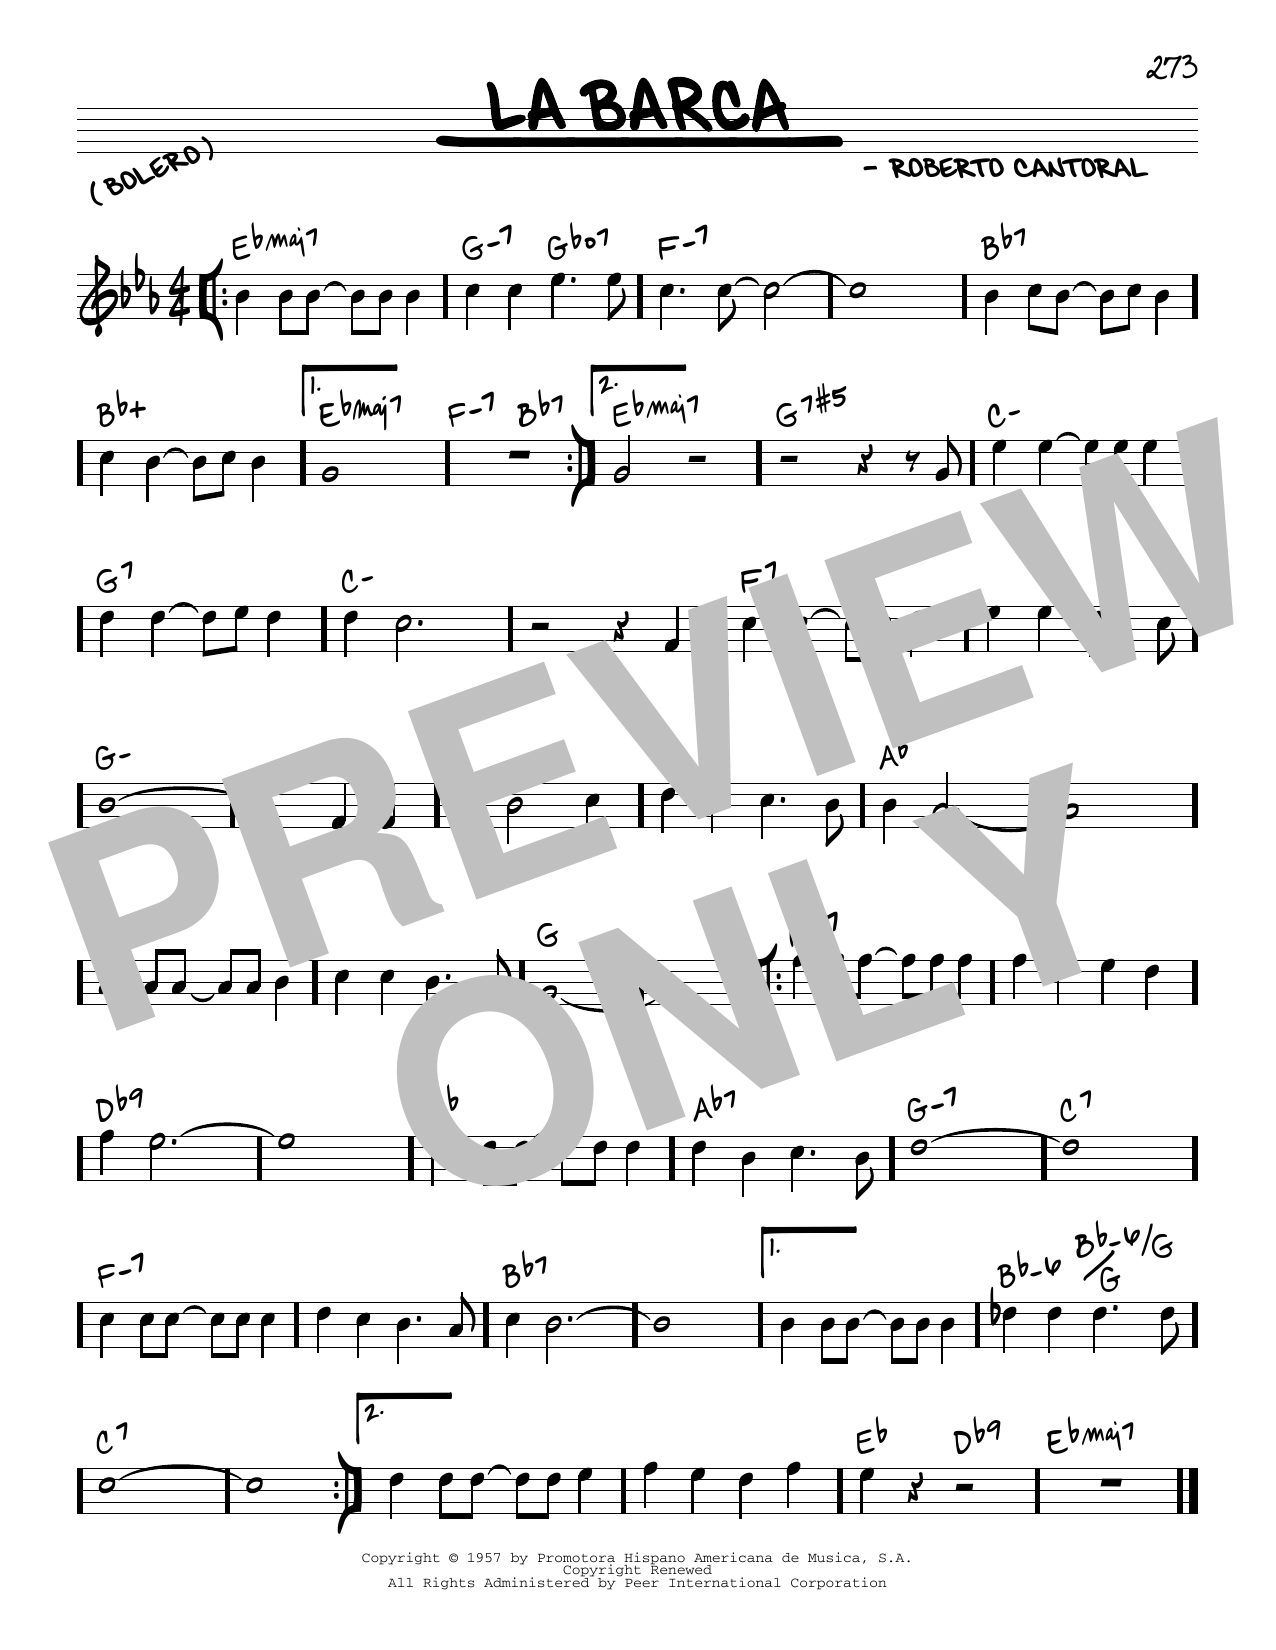 Roberto Cantoral La Barca Sheet Music Notes & Chords for Real Book – Melody & Chords - Download or Print PDF